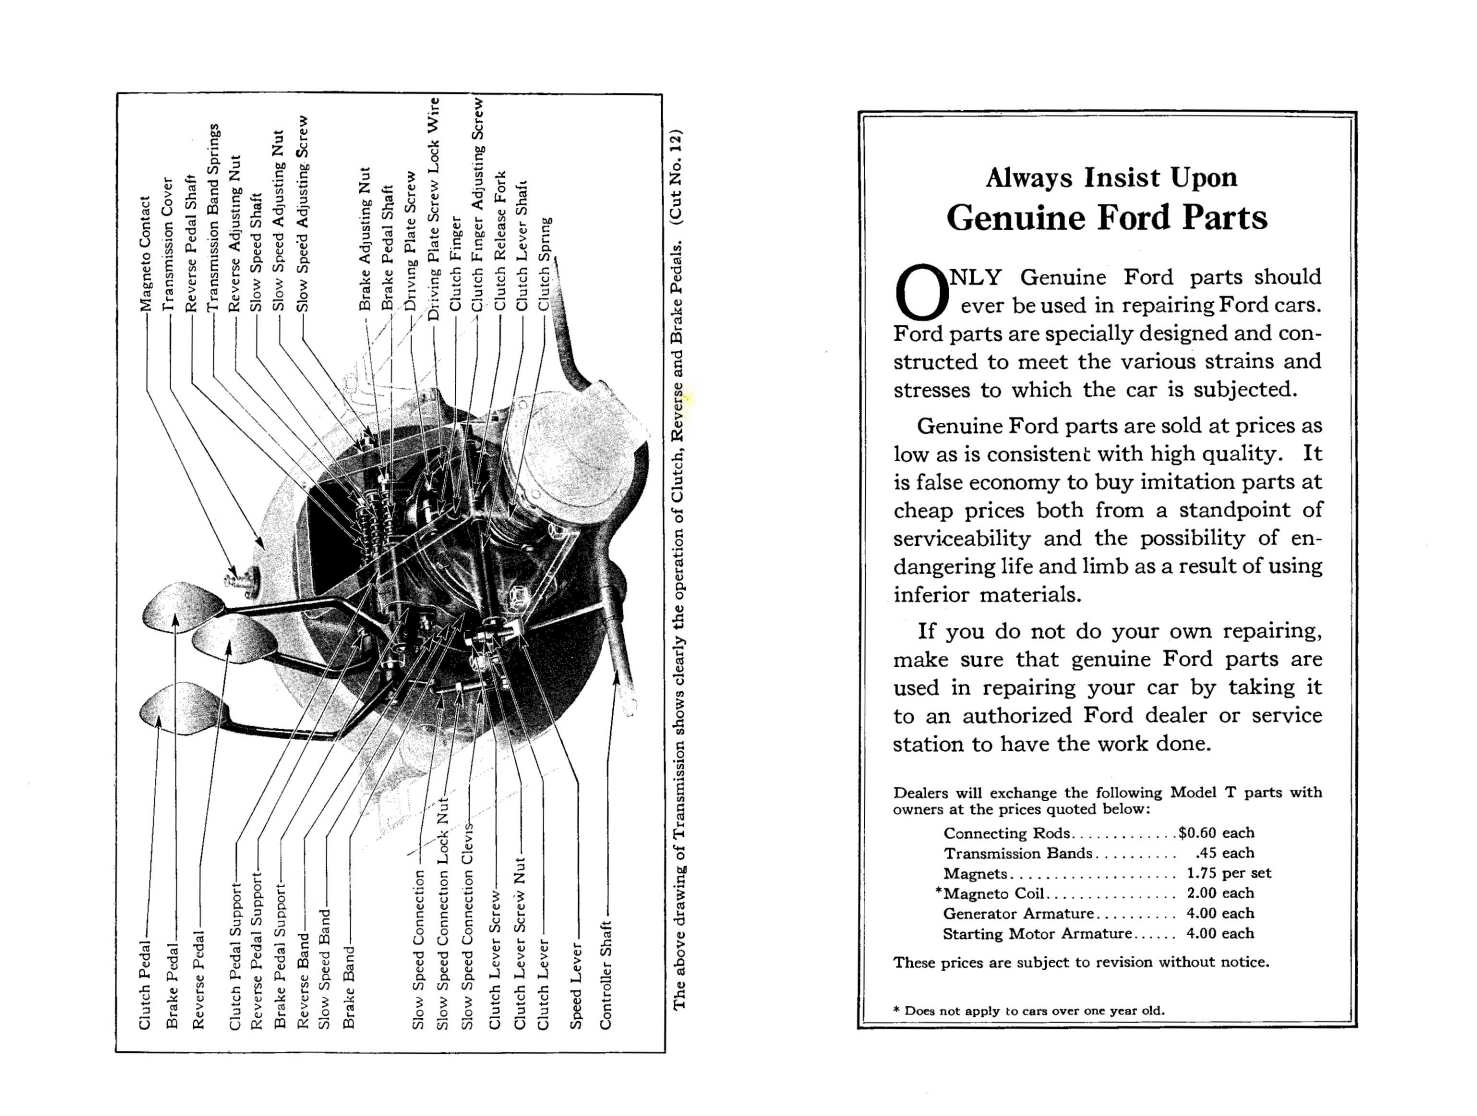 n_1924 Ford Owners Manual-32-33.jpg